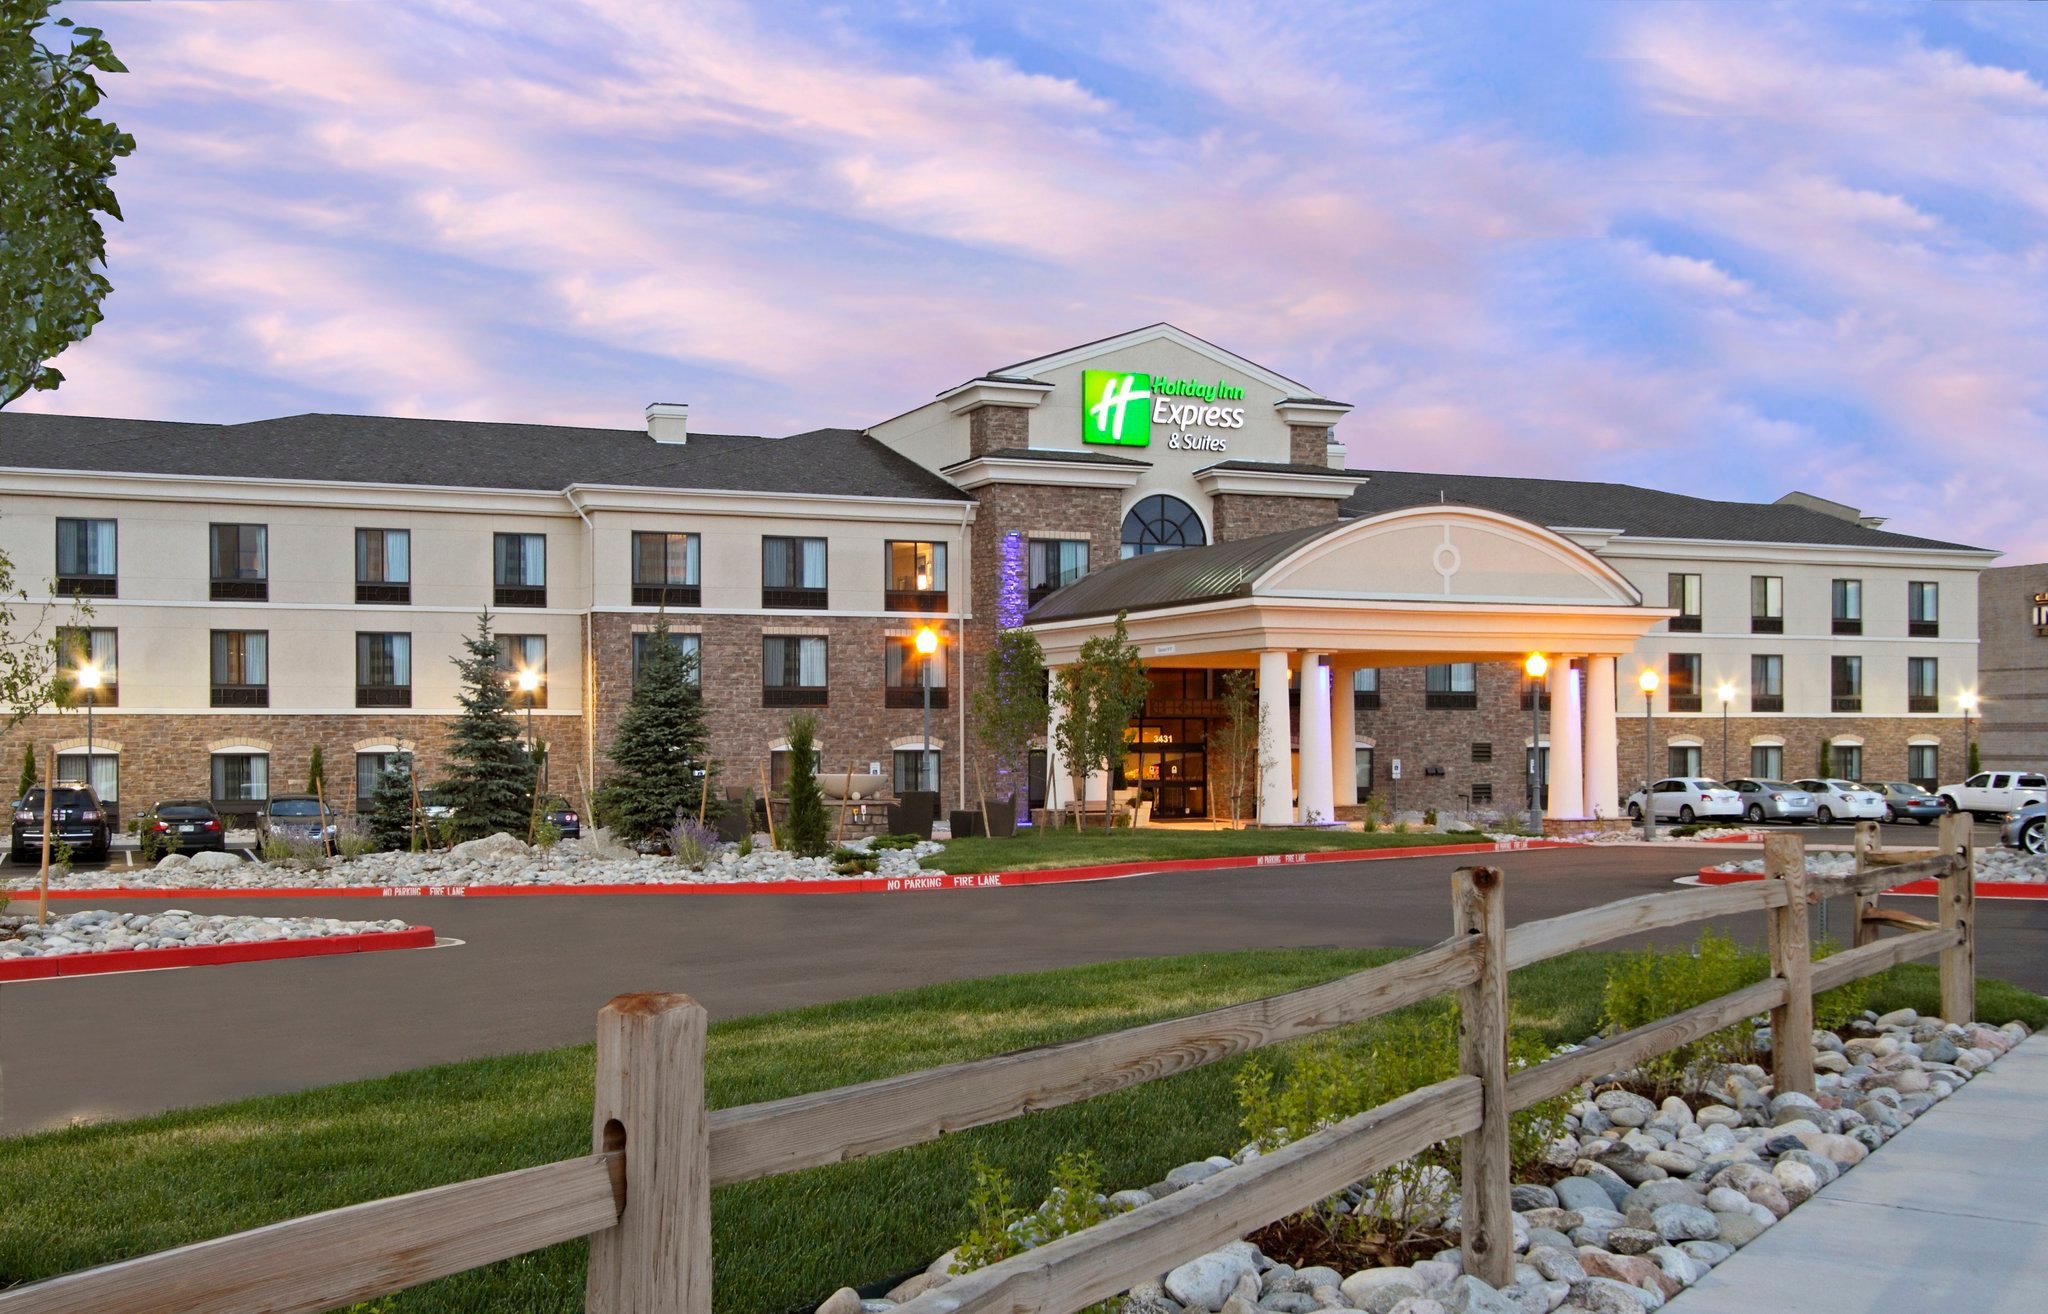 Photo of Holiday Inn Express & Suites Colorado Springs-First & Main, Colorado Springs, CO